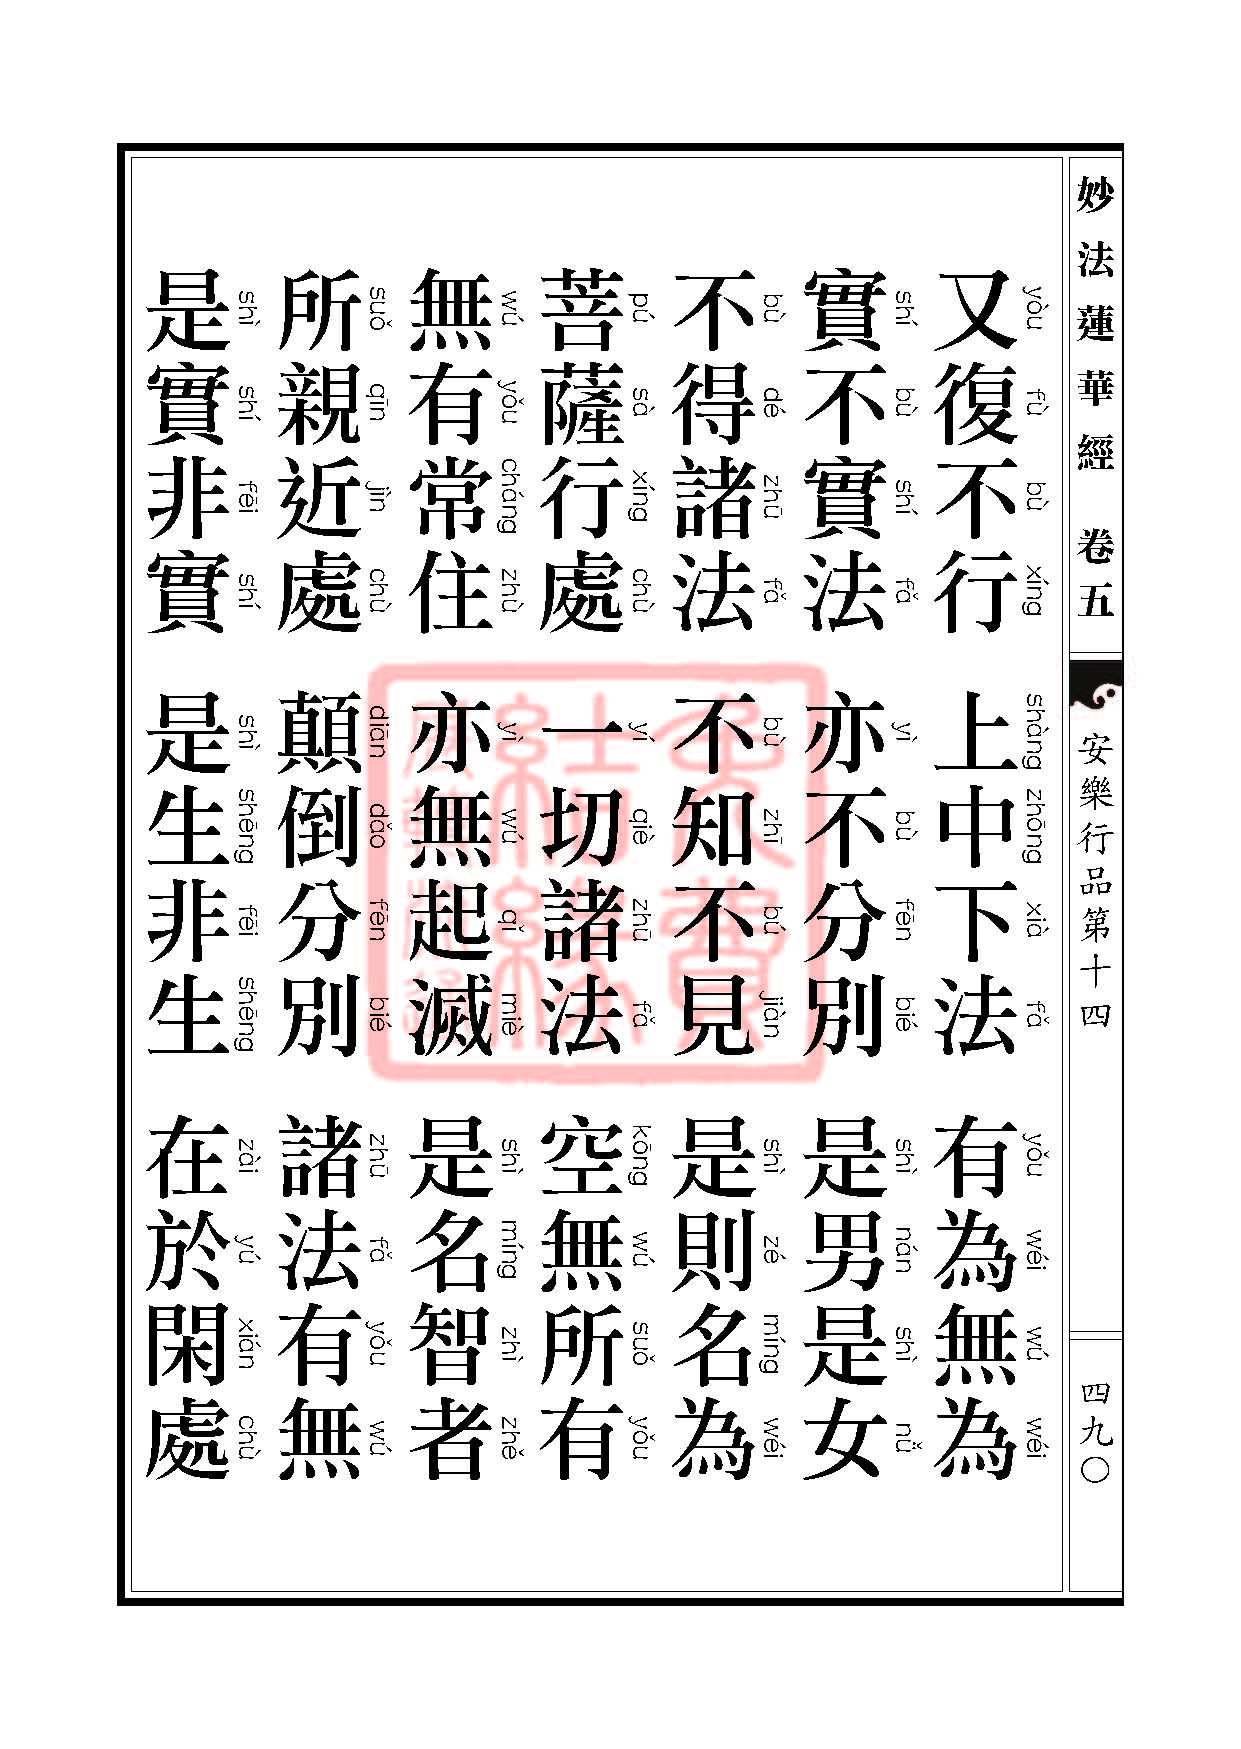 Book_FHJ_HK-A6-PY_Web_页面_490.jpg